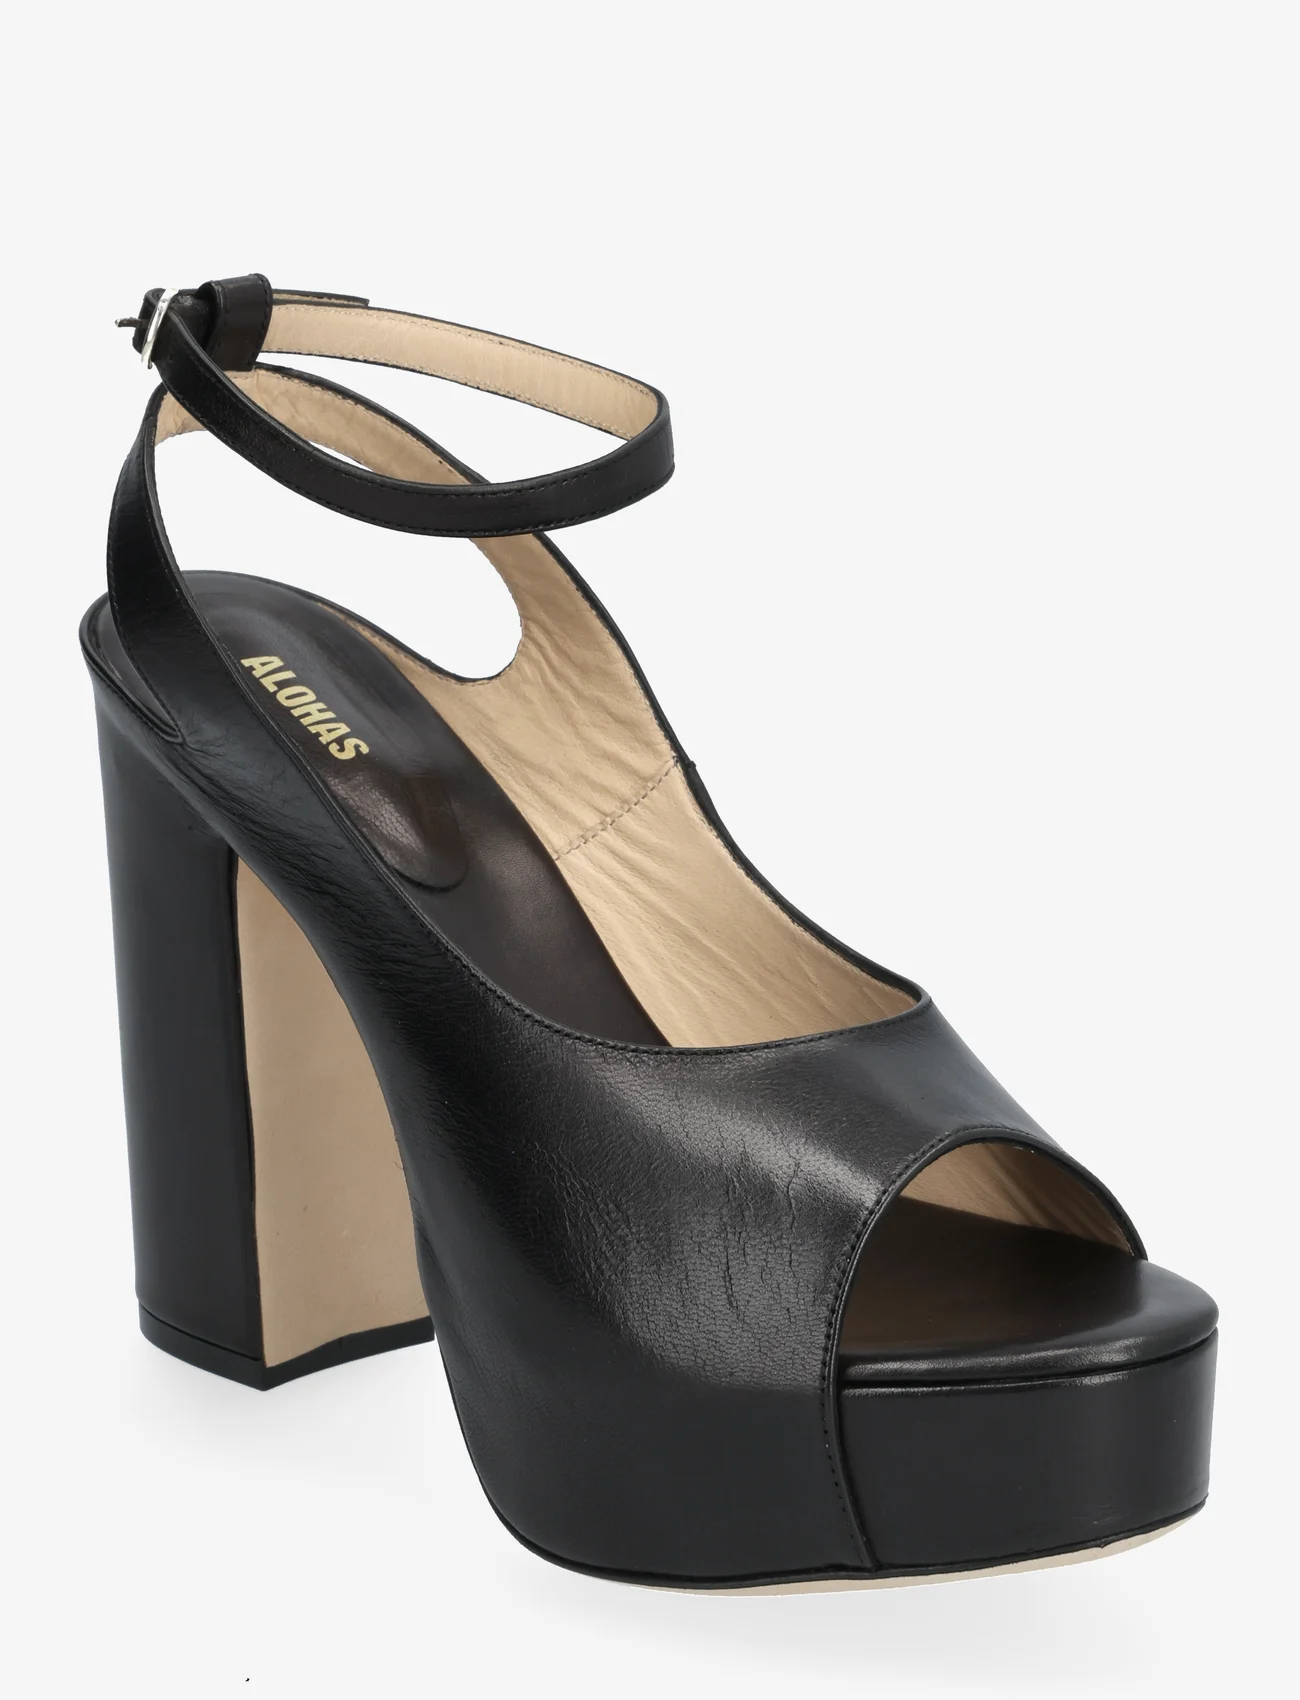 ALOHAS - Sadie Black Leather Sandals - open toe shoes - black - 0